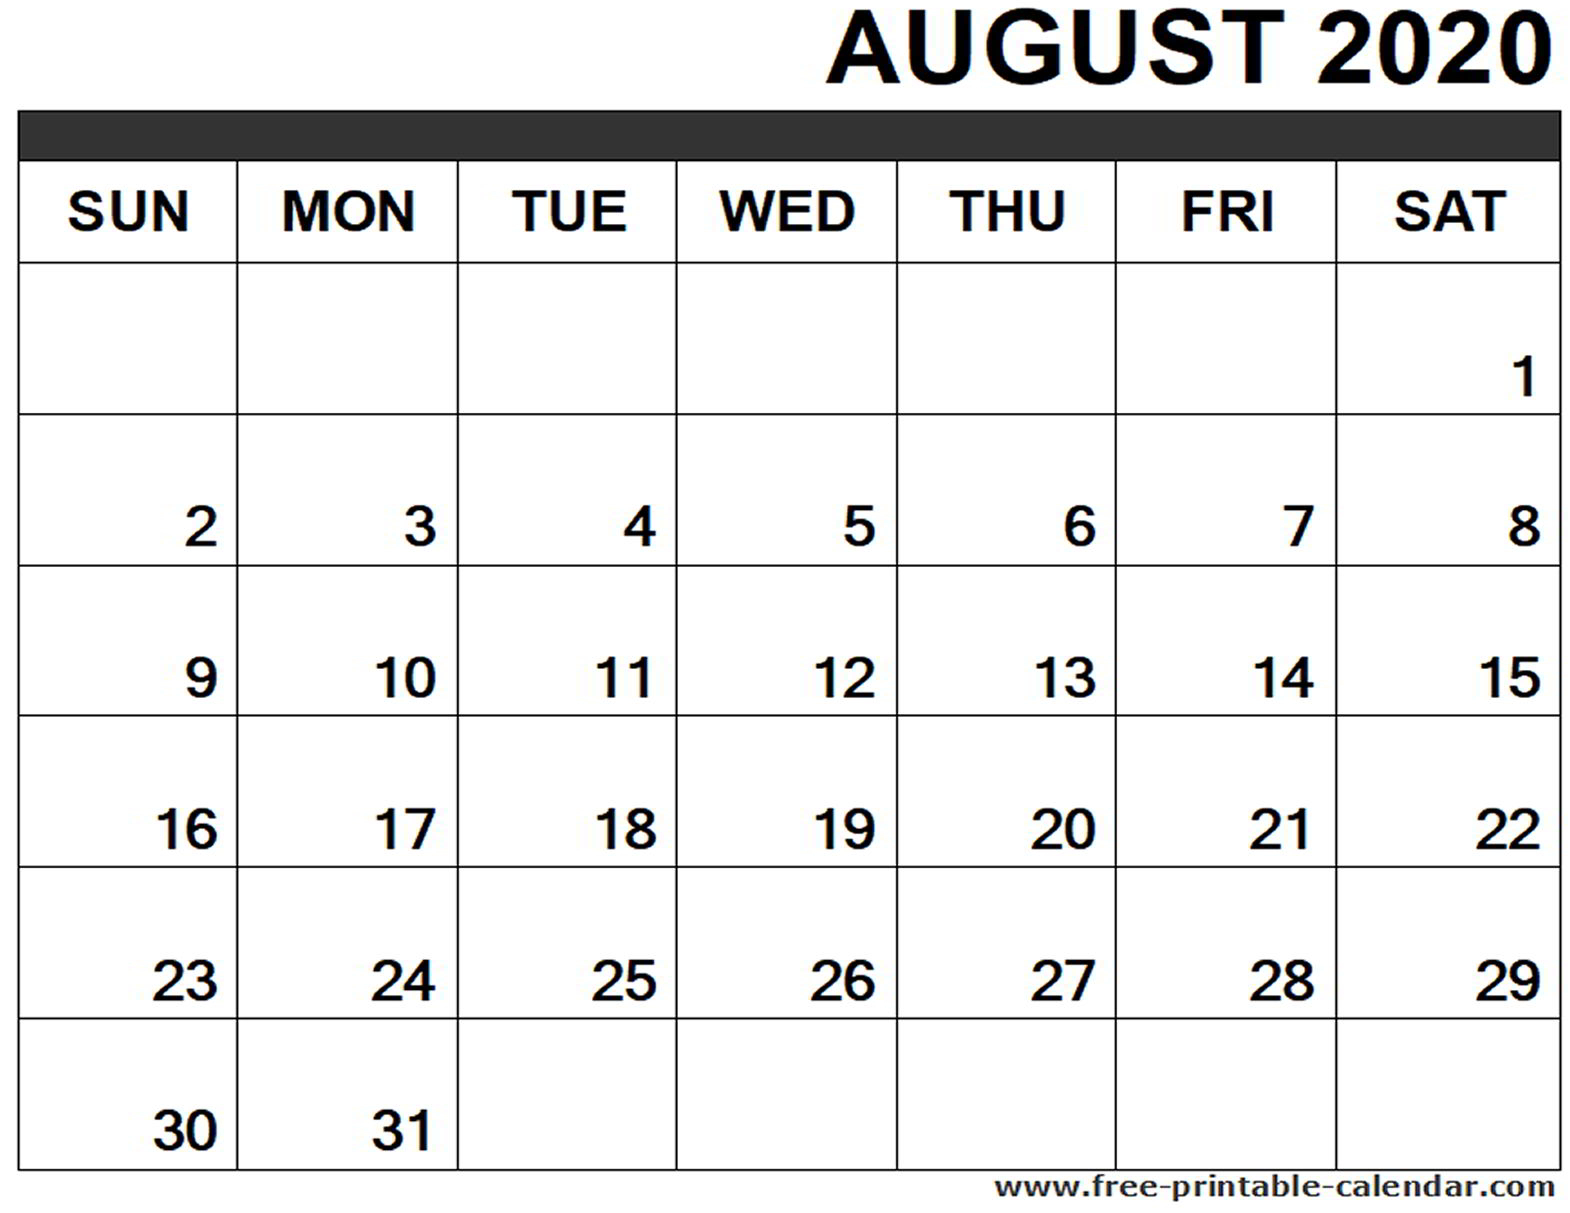 August 2020 Calendar Printable  Freeprintablecalendar throughout August 2020 Calendar Printable